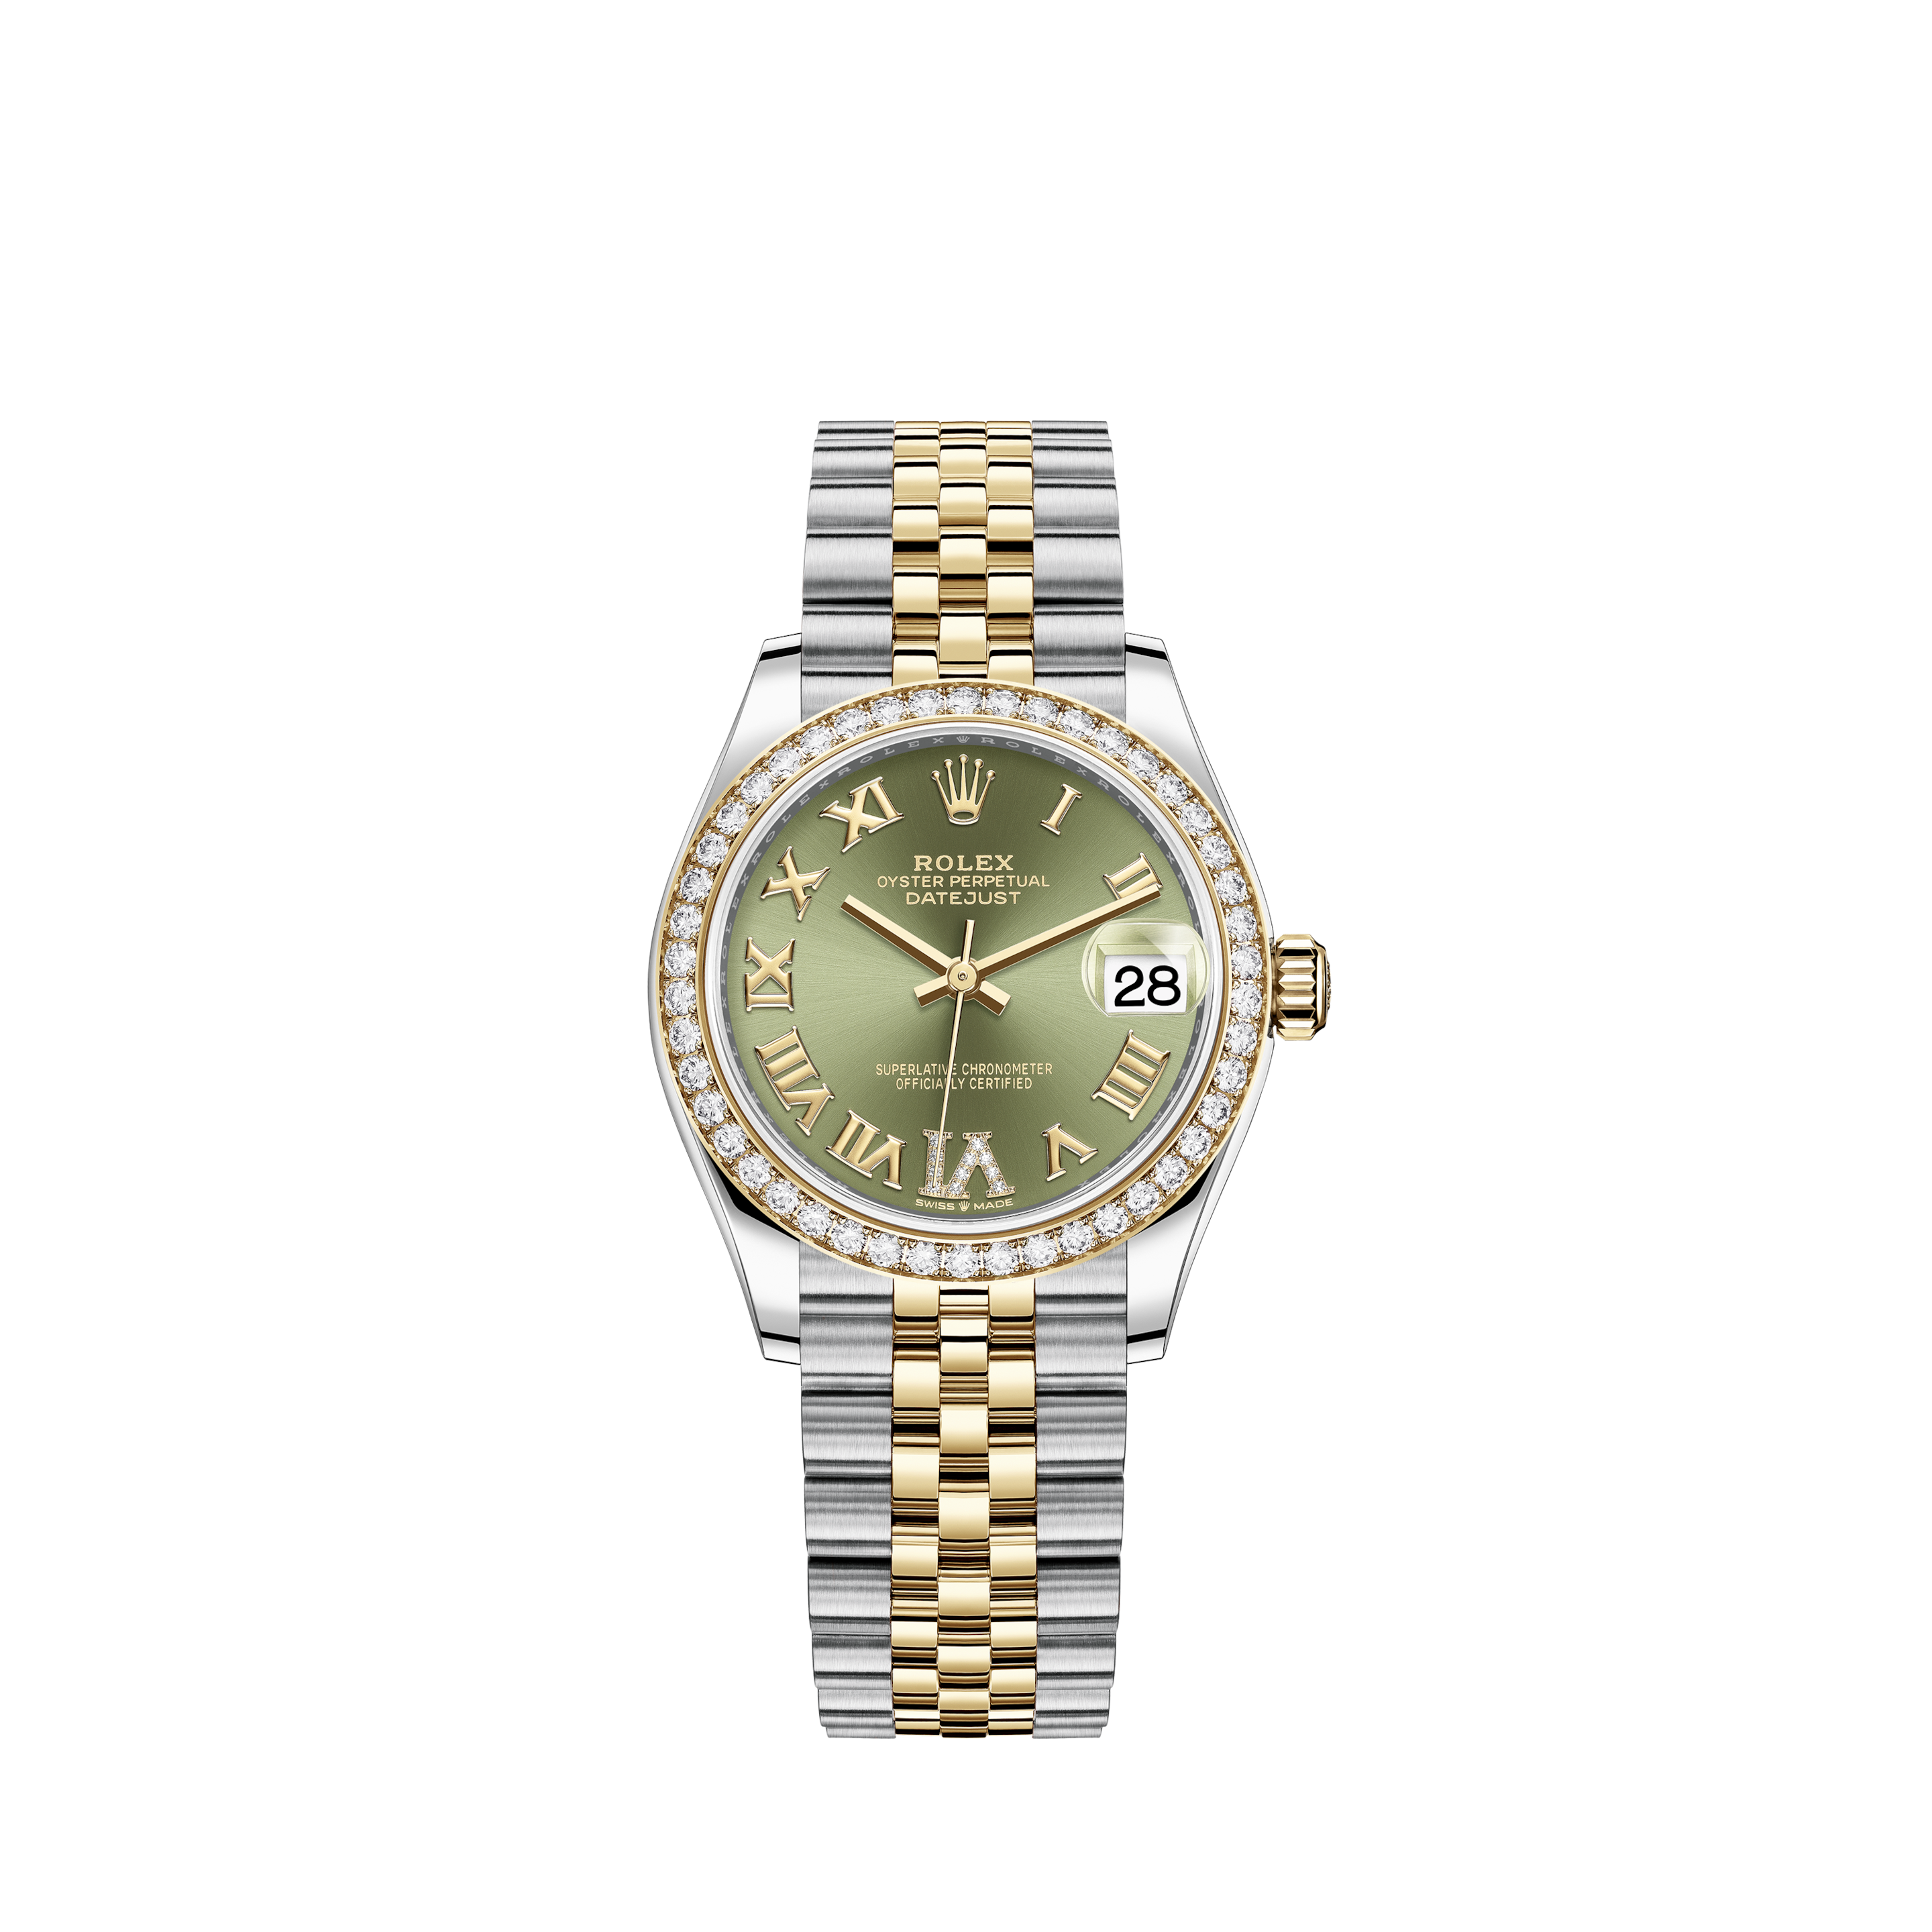 Rolex Daytona 116519 watch